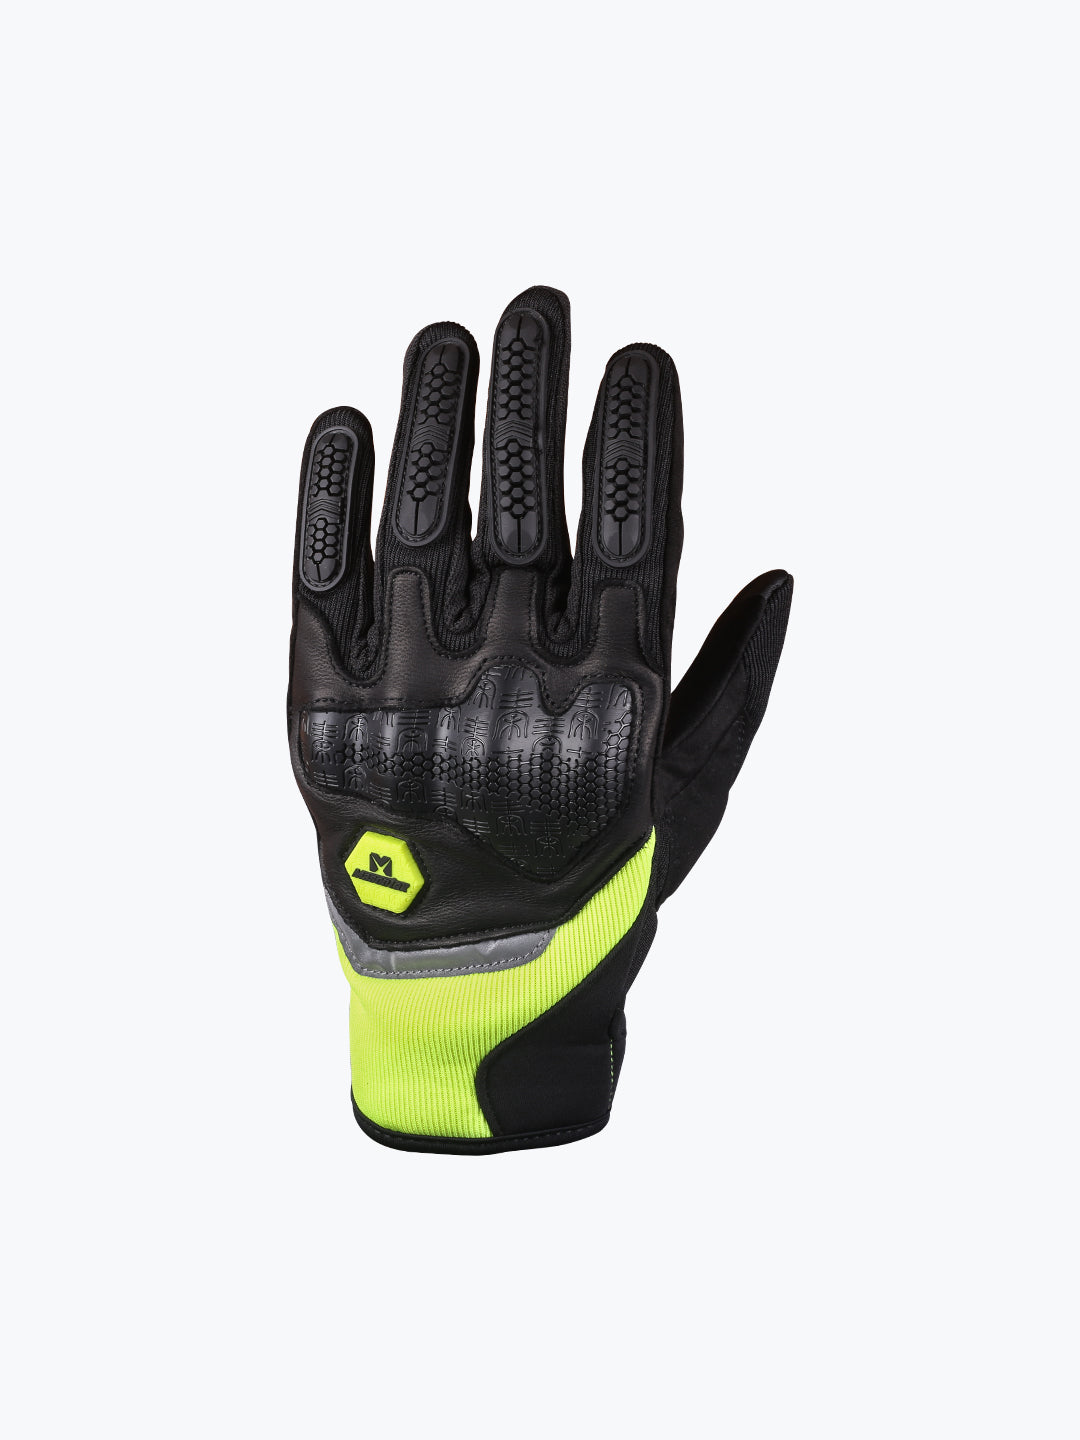 Masontex Gloves M30 IV Black Green